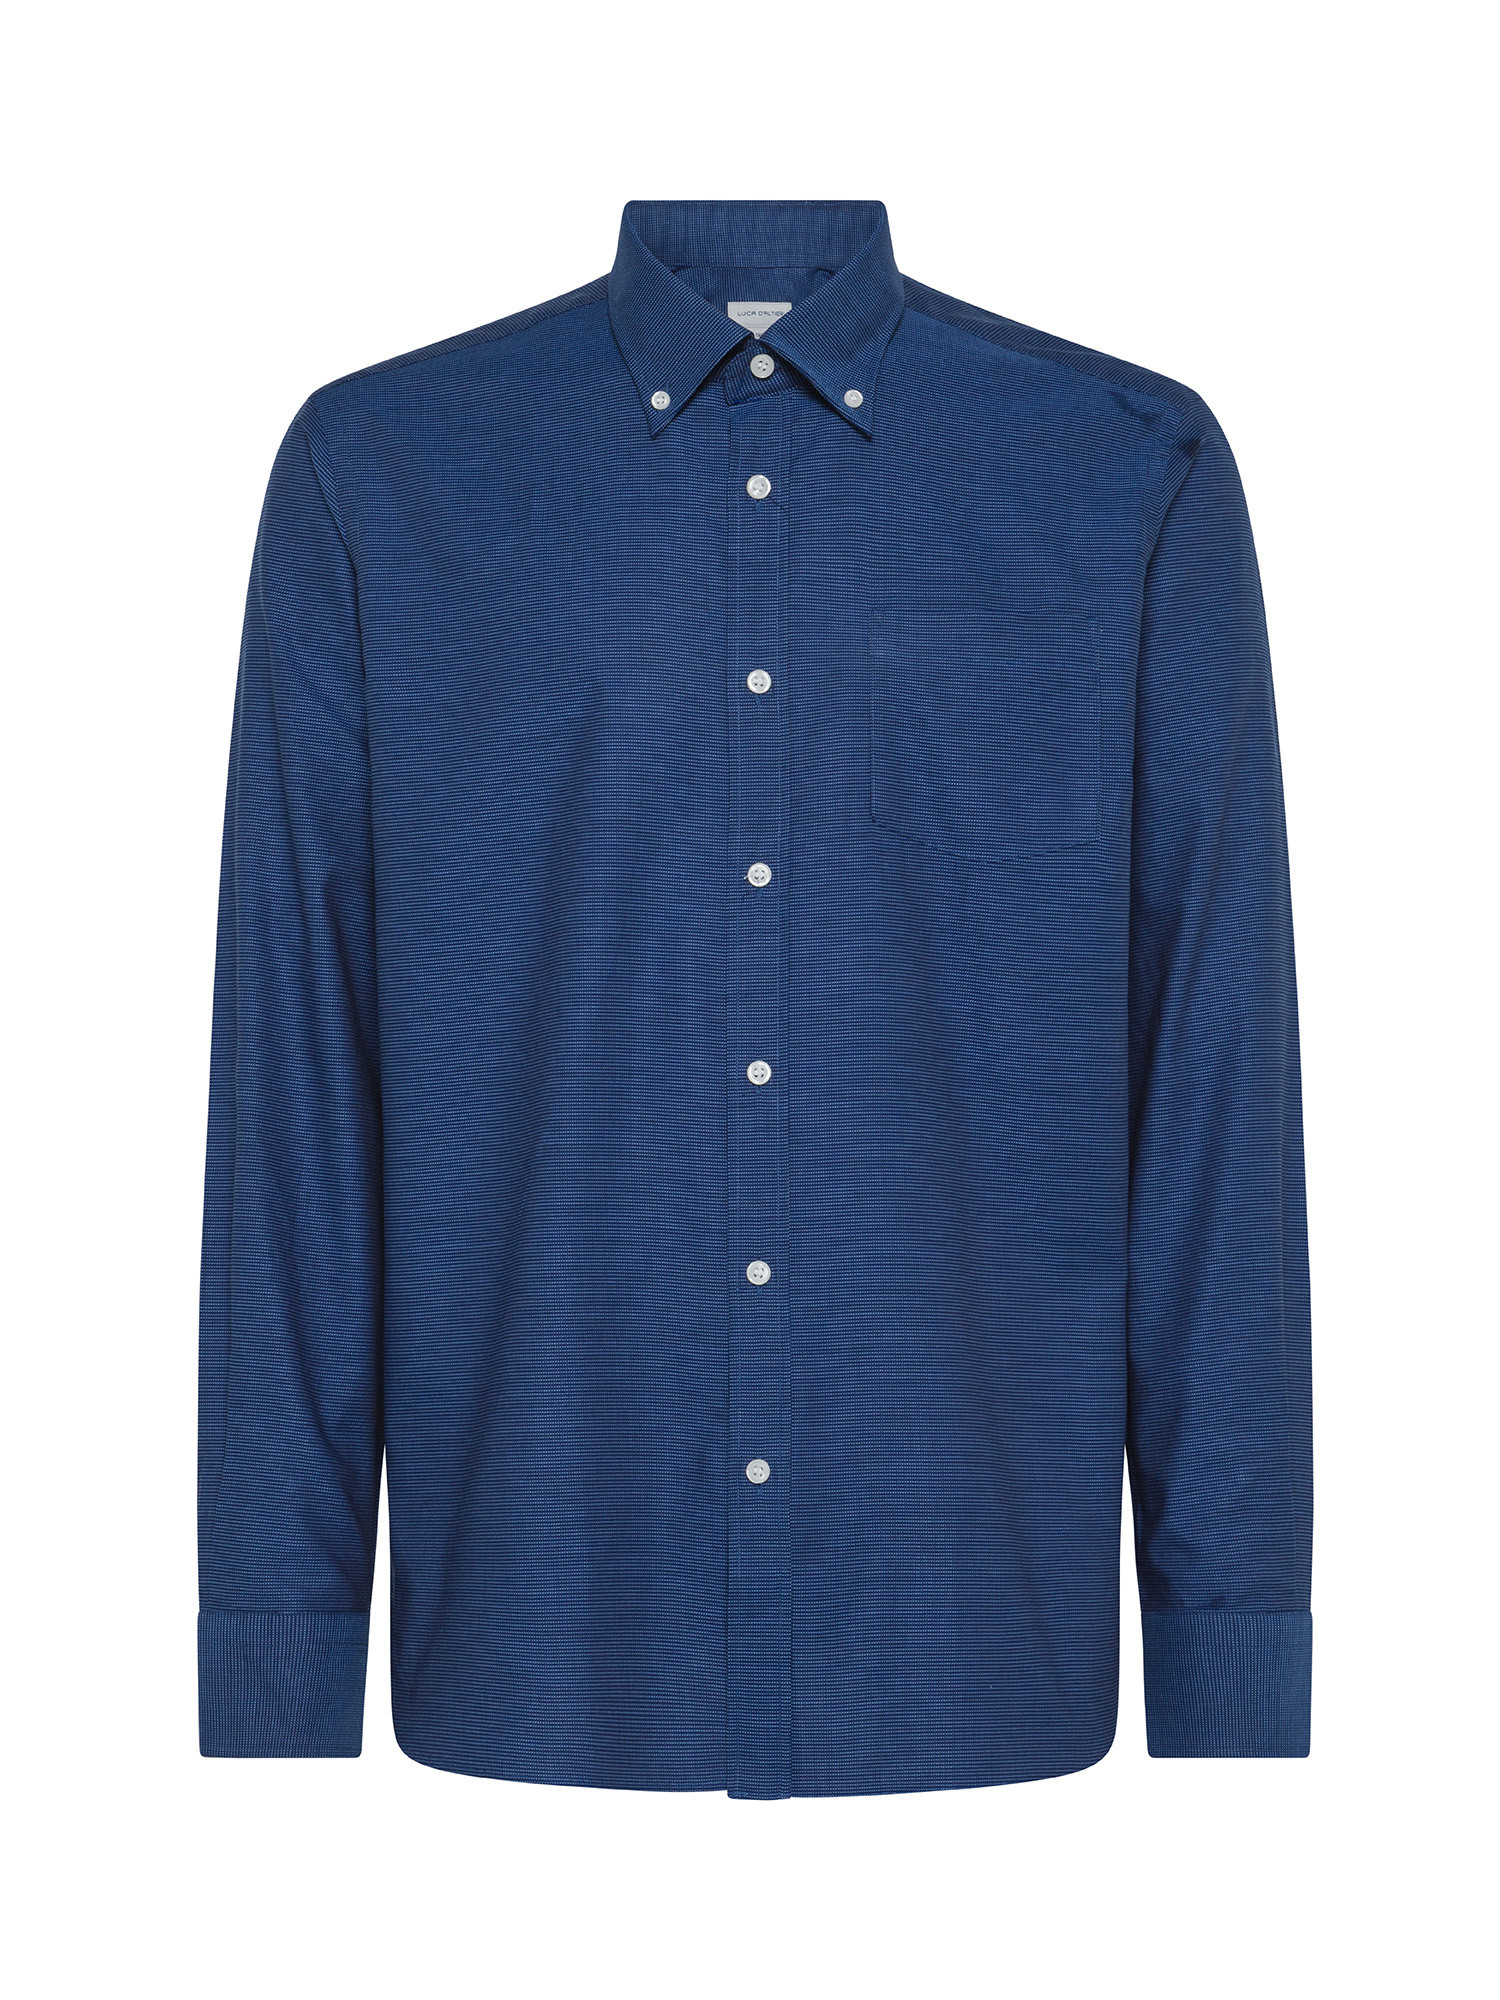 Luca D'Altieri - Tailor fit shirt in pure cotton, Blue, large image number 0